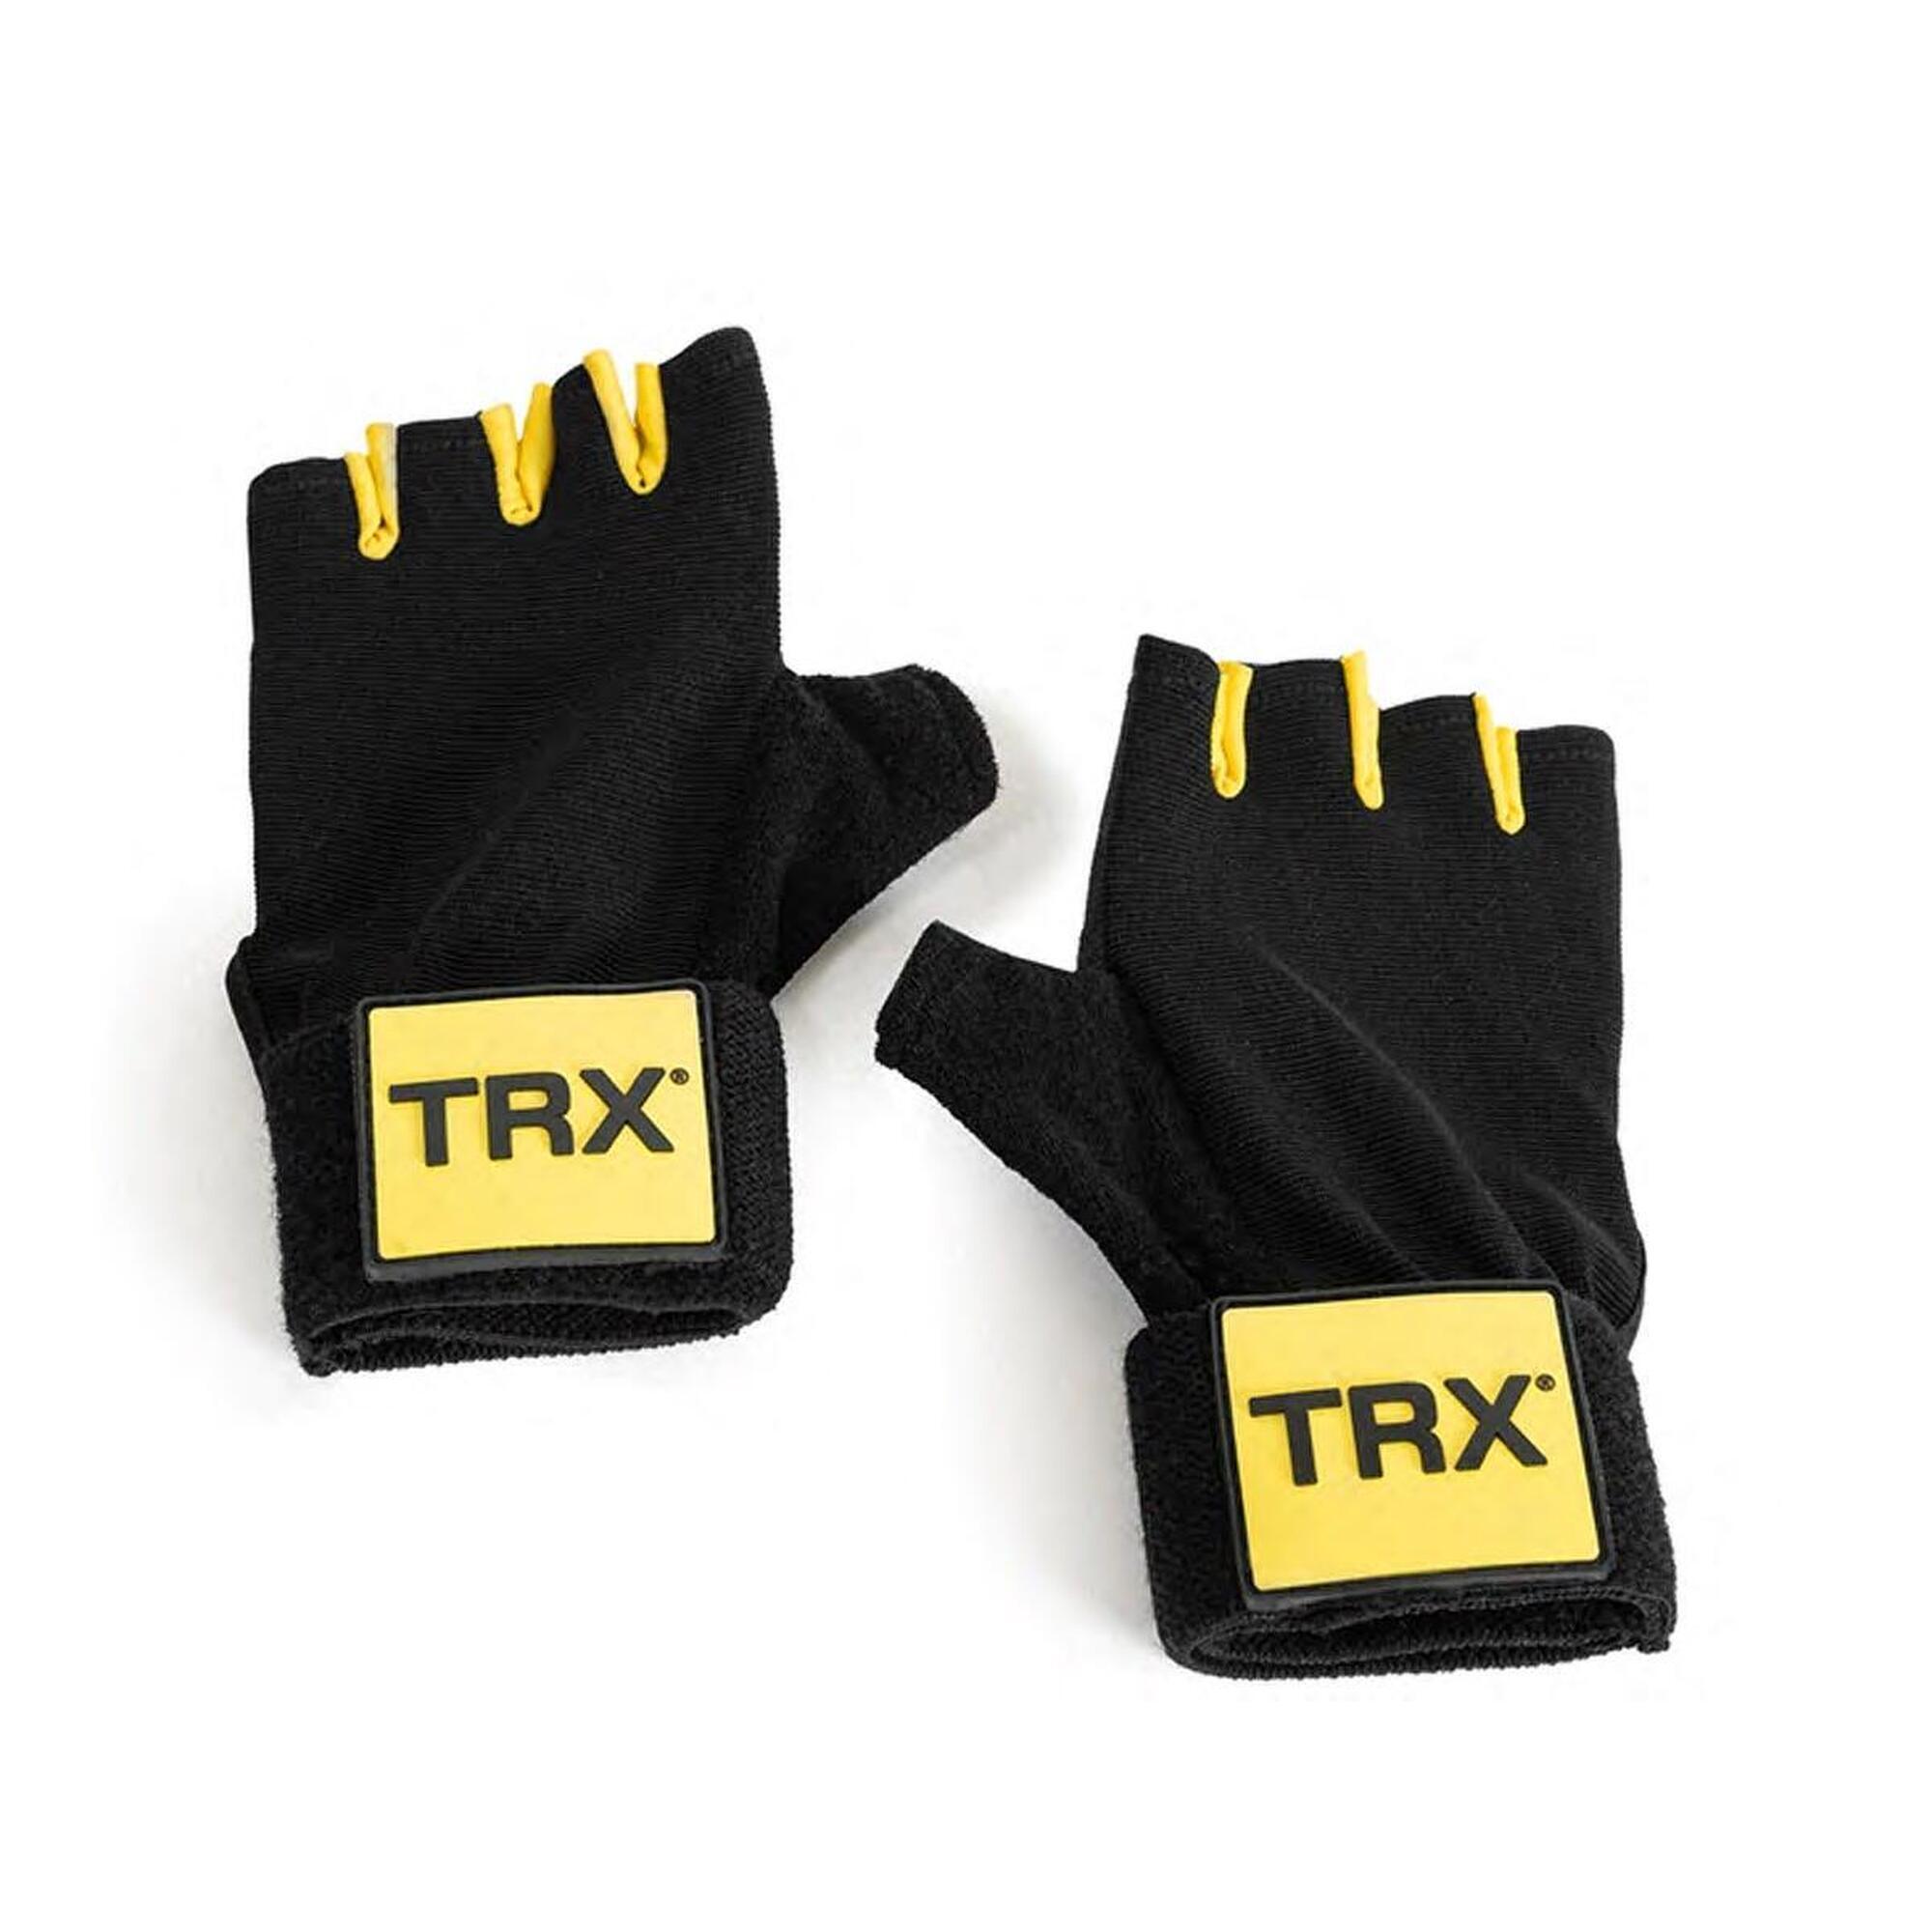 TRX TRX training Gloves Large